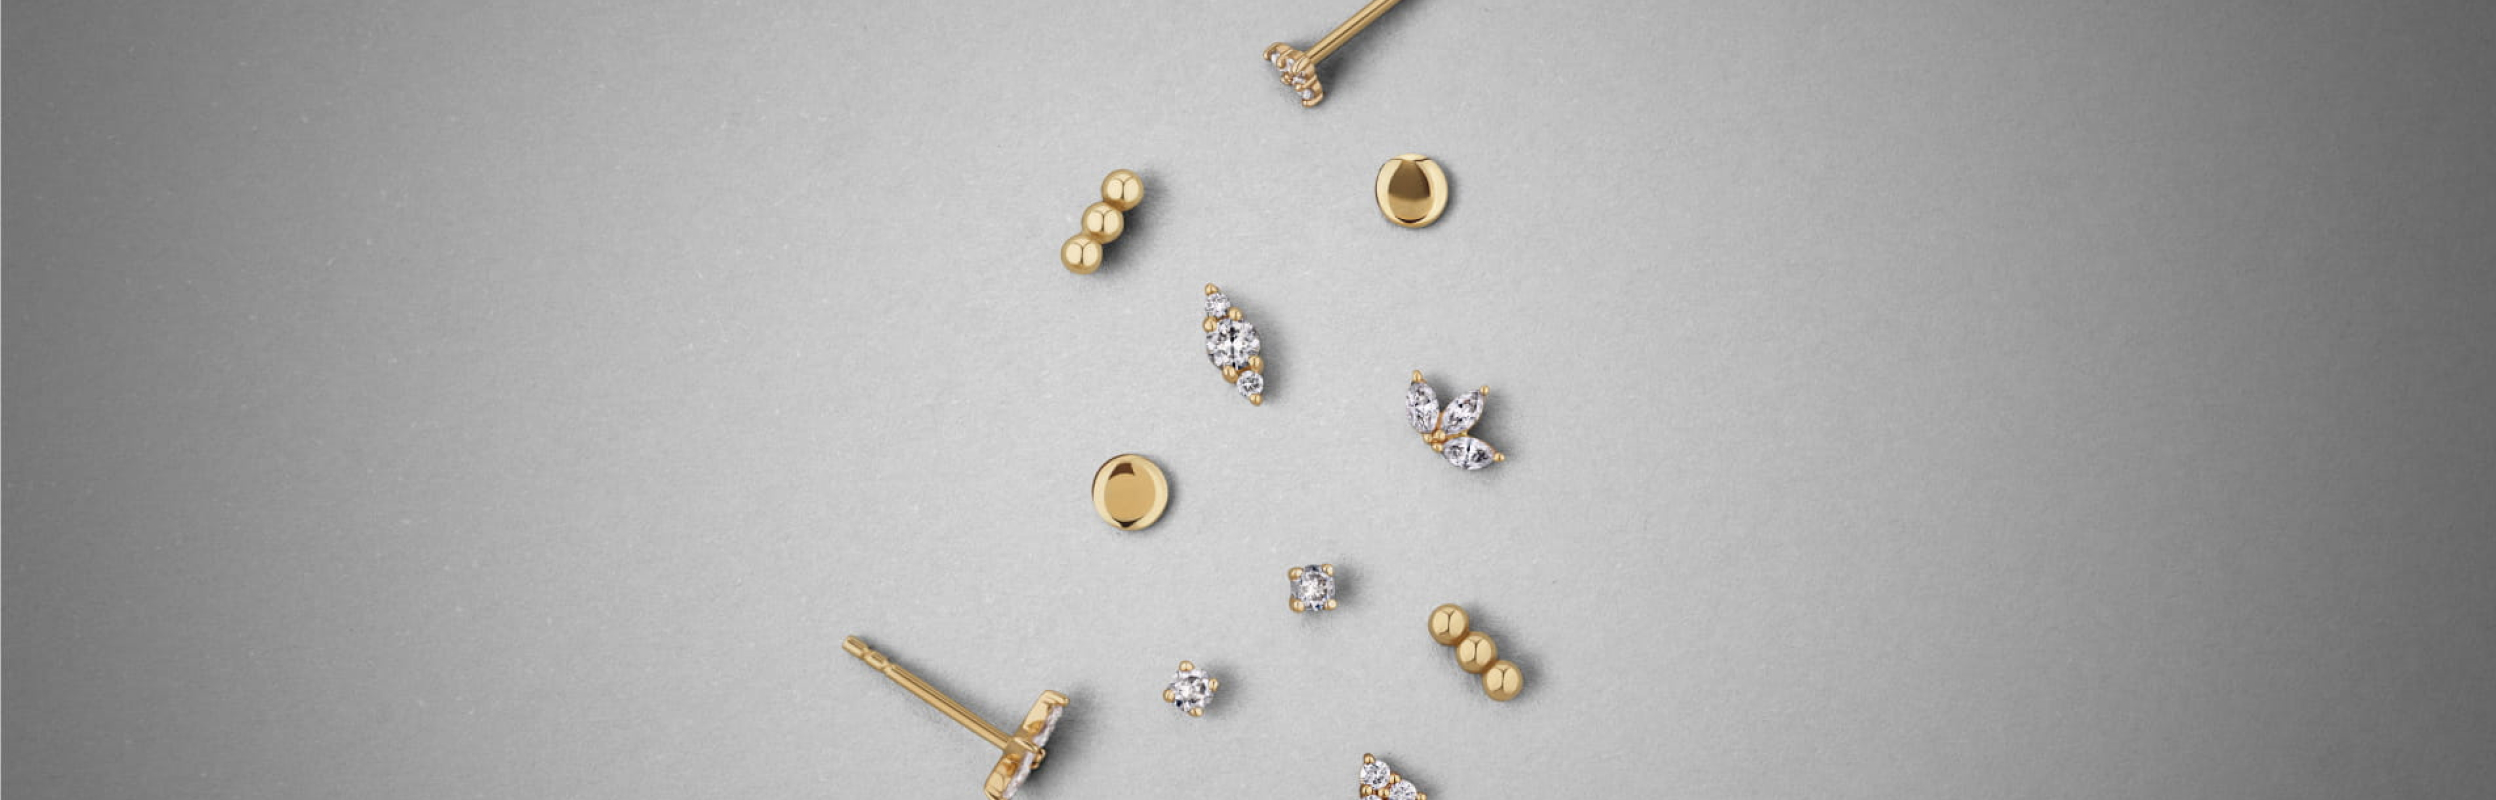 gold minimalist dainty earrings, studs and diamonds